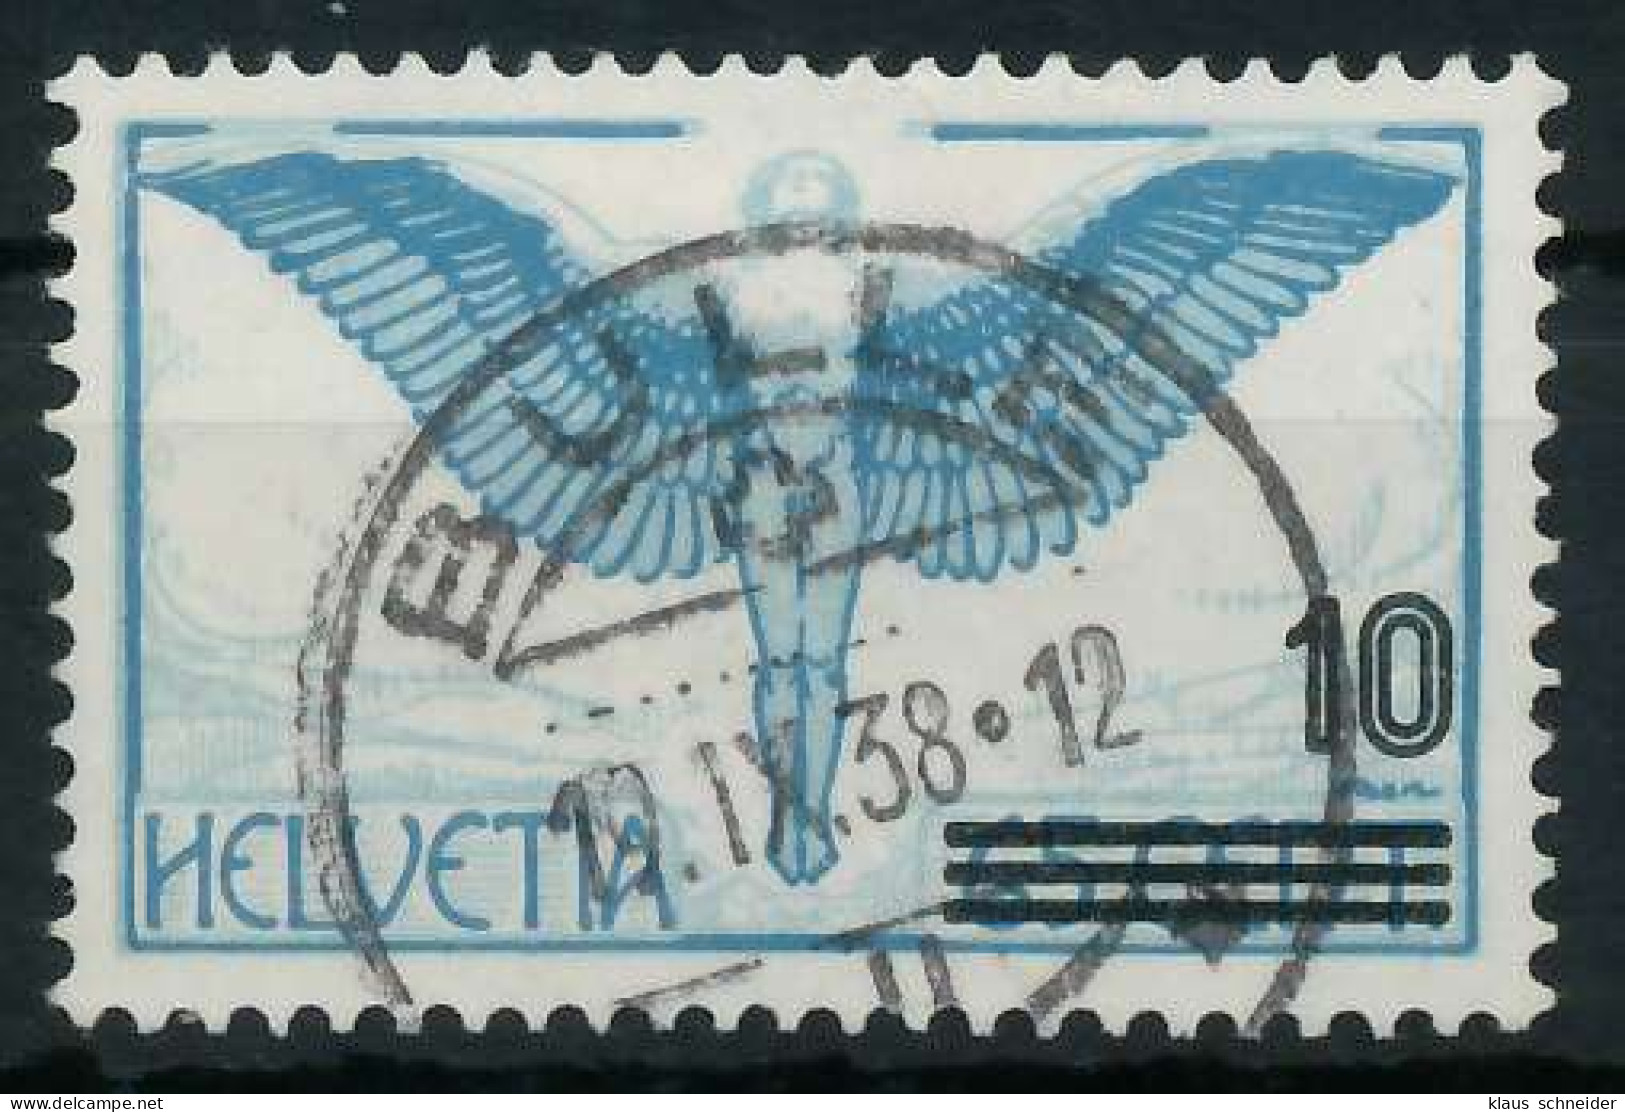 SCHWEIZ FLUGMARKEN Nr 320IIaI Zentrisch Gestempelt X6B613E - Used Stamps